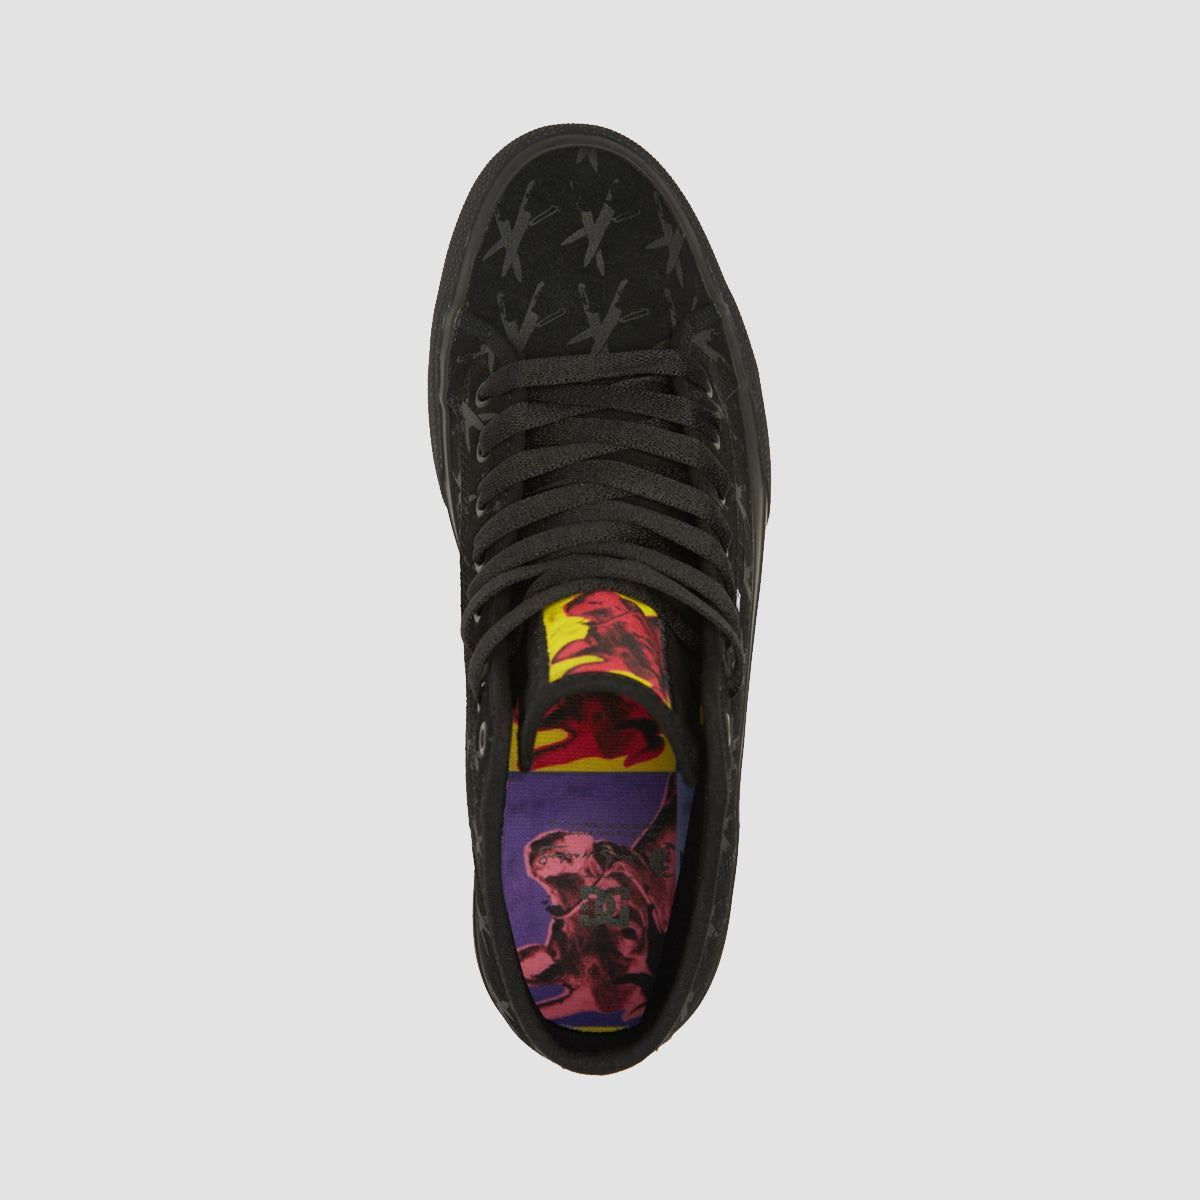 DC X Andy Warhol Manual Hi Shoes - Black/Black